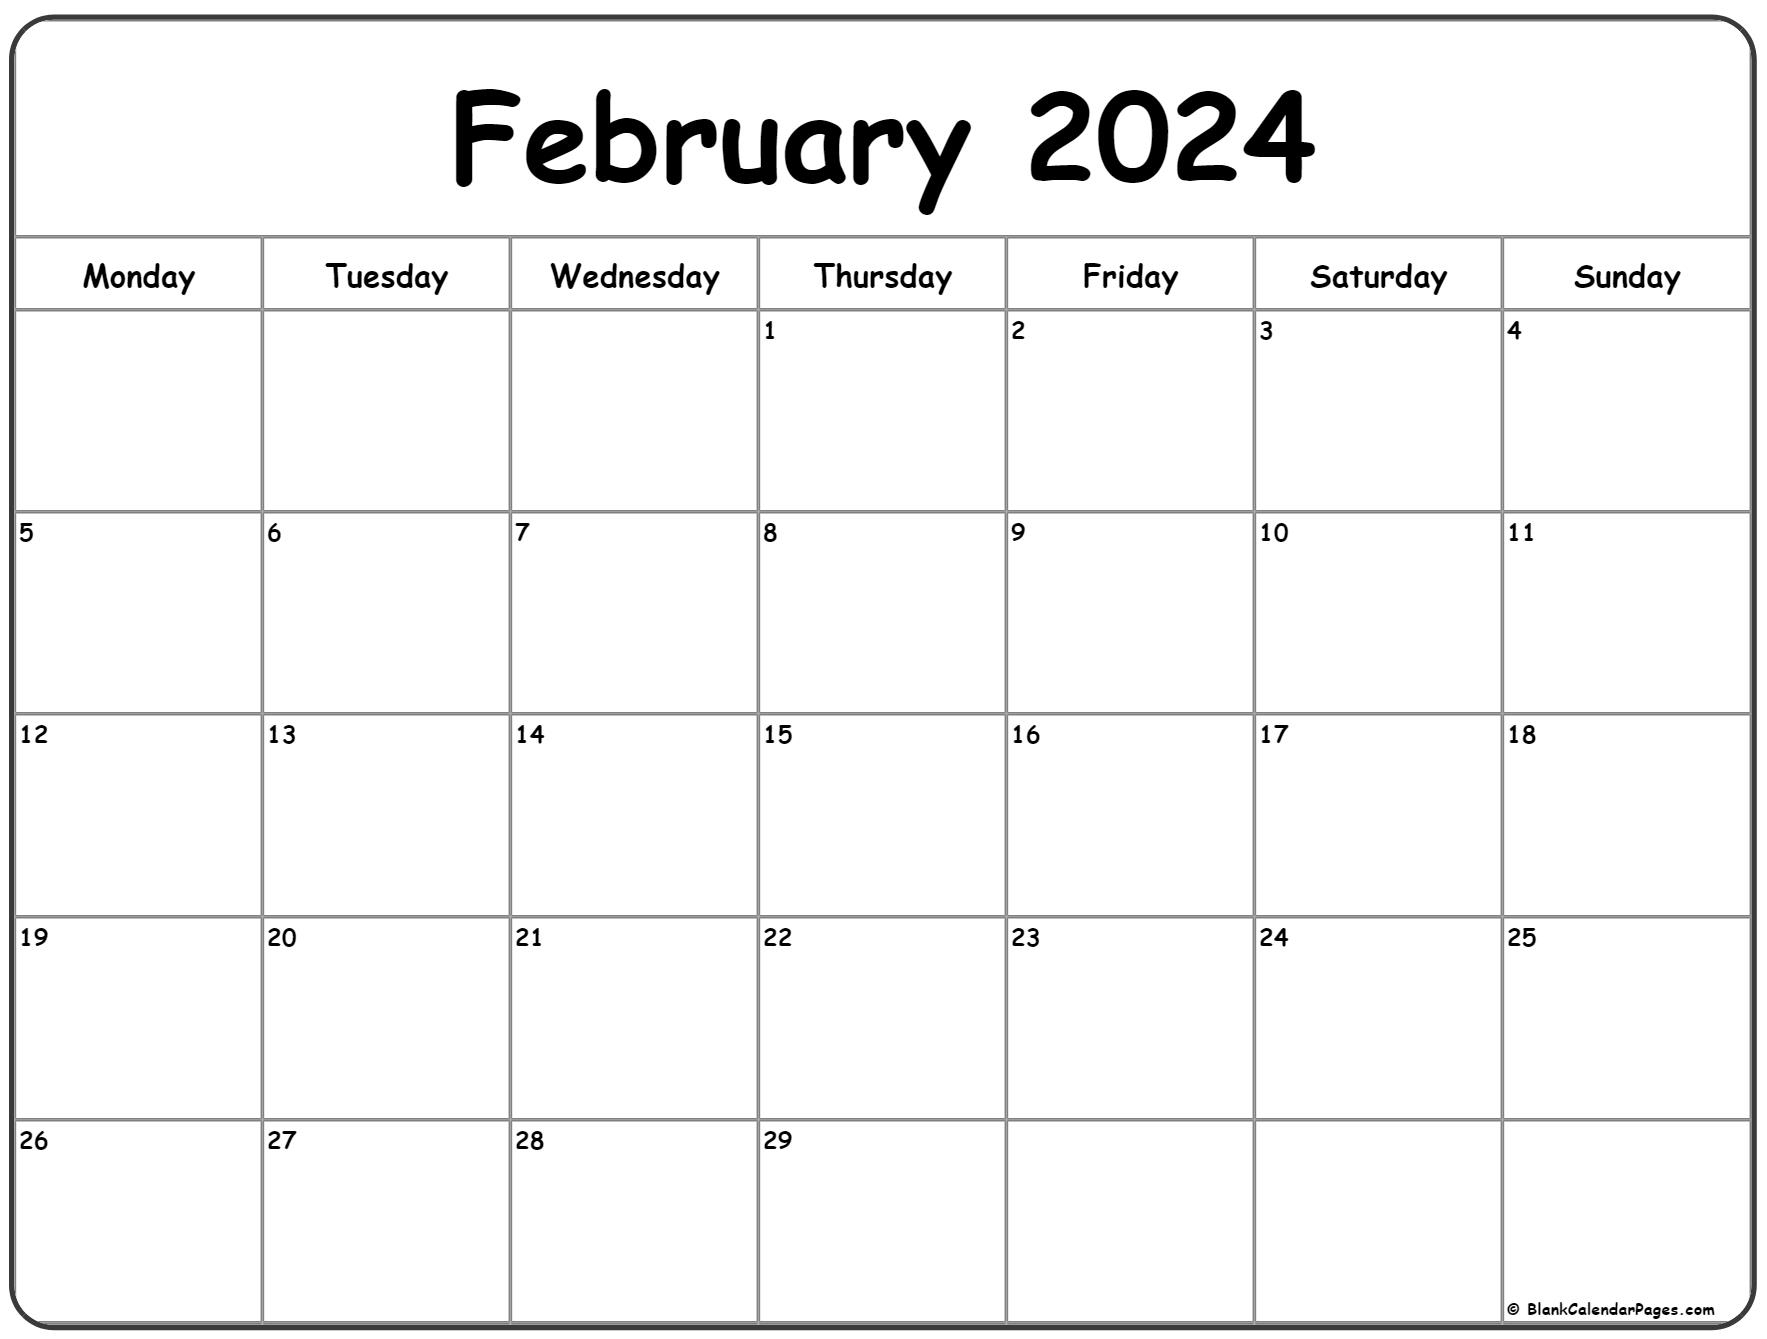 February 2024 Monday Calendar | Monday To Sunday for Printable February 2024 Calendar Page